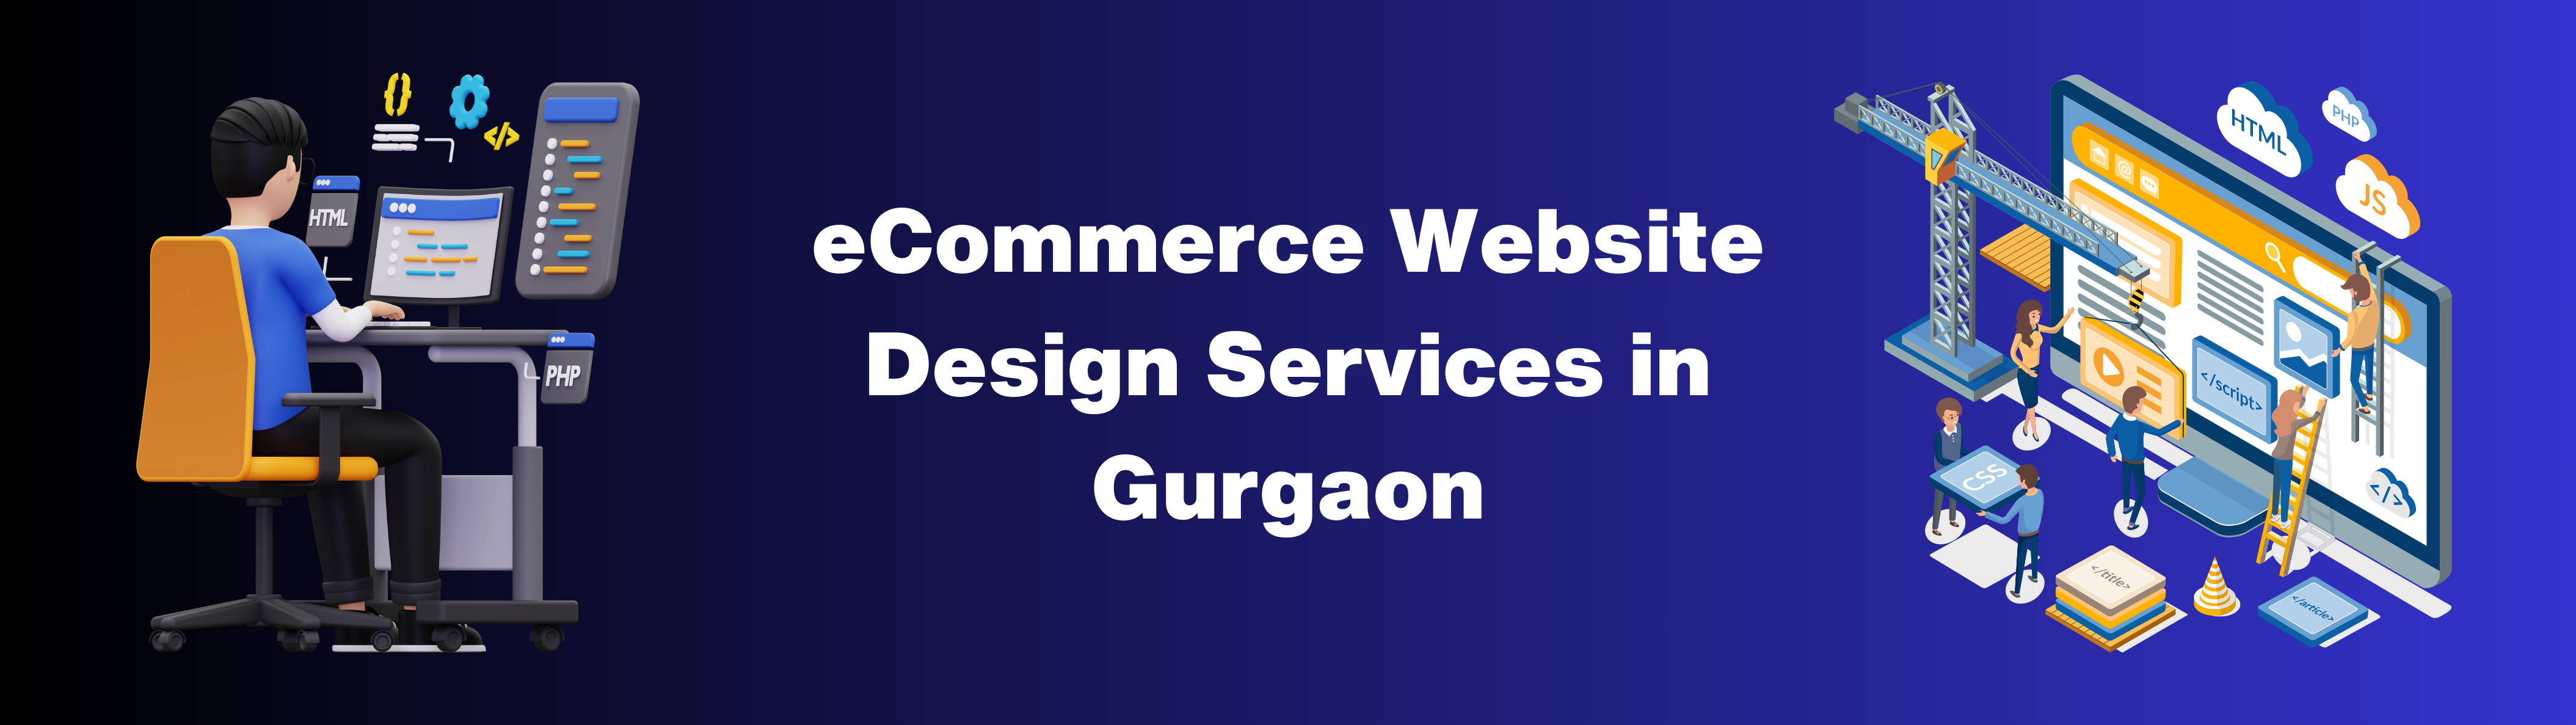 eCommerce Website Design Services​ in Gurgaon